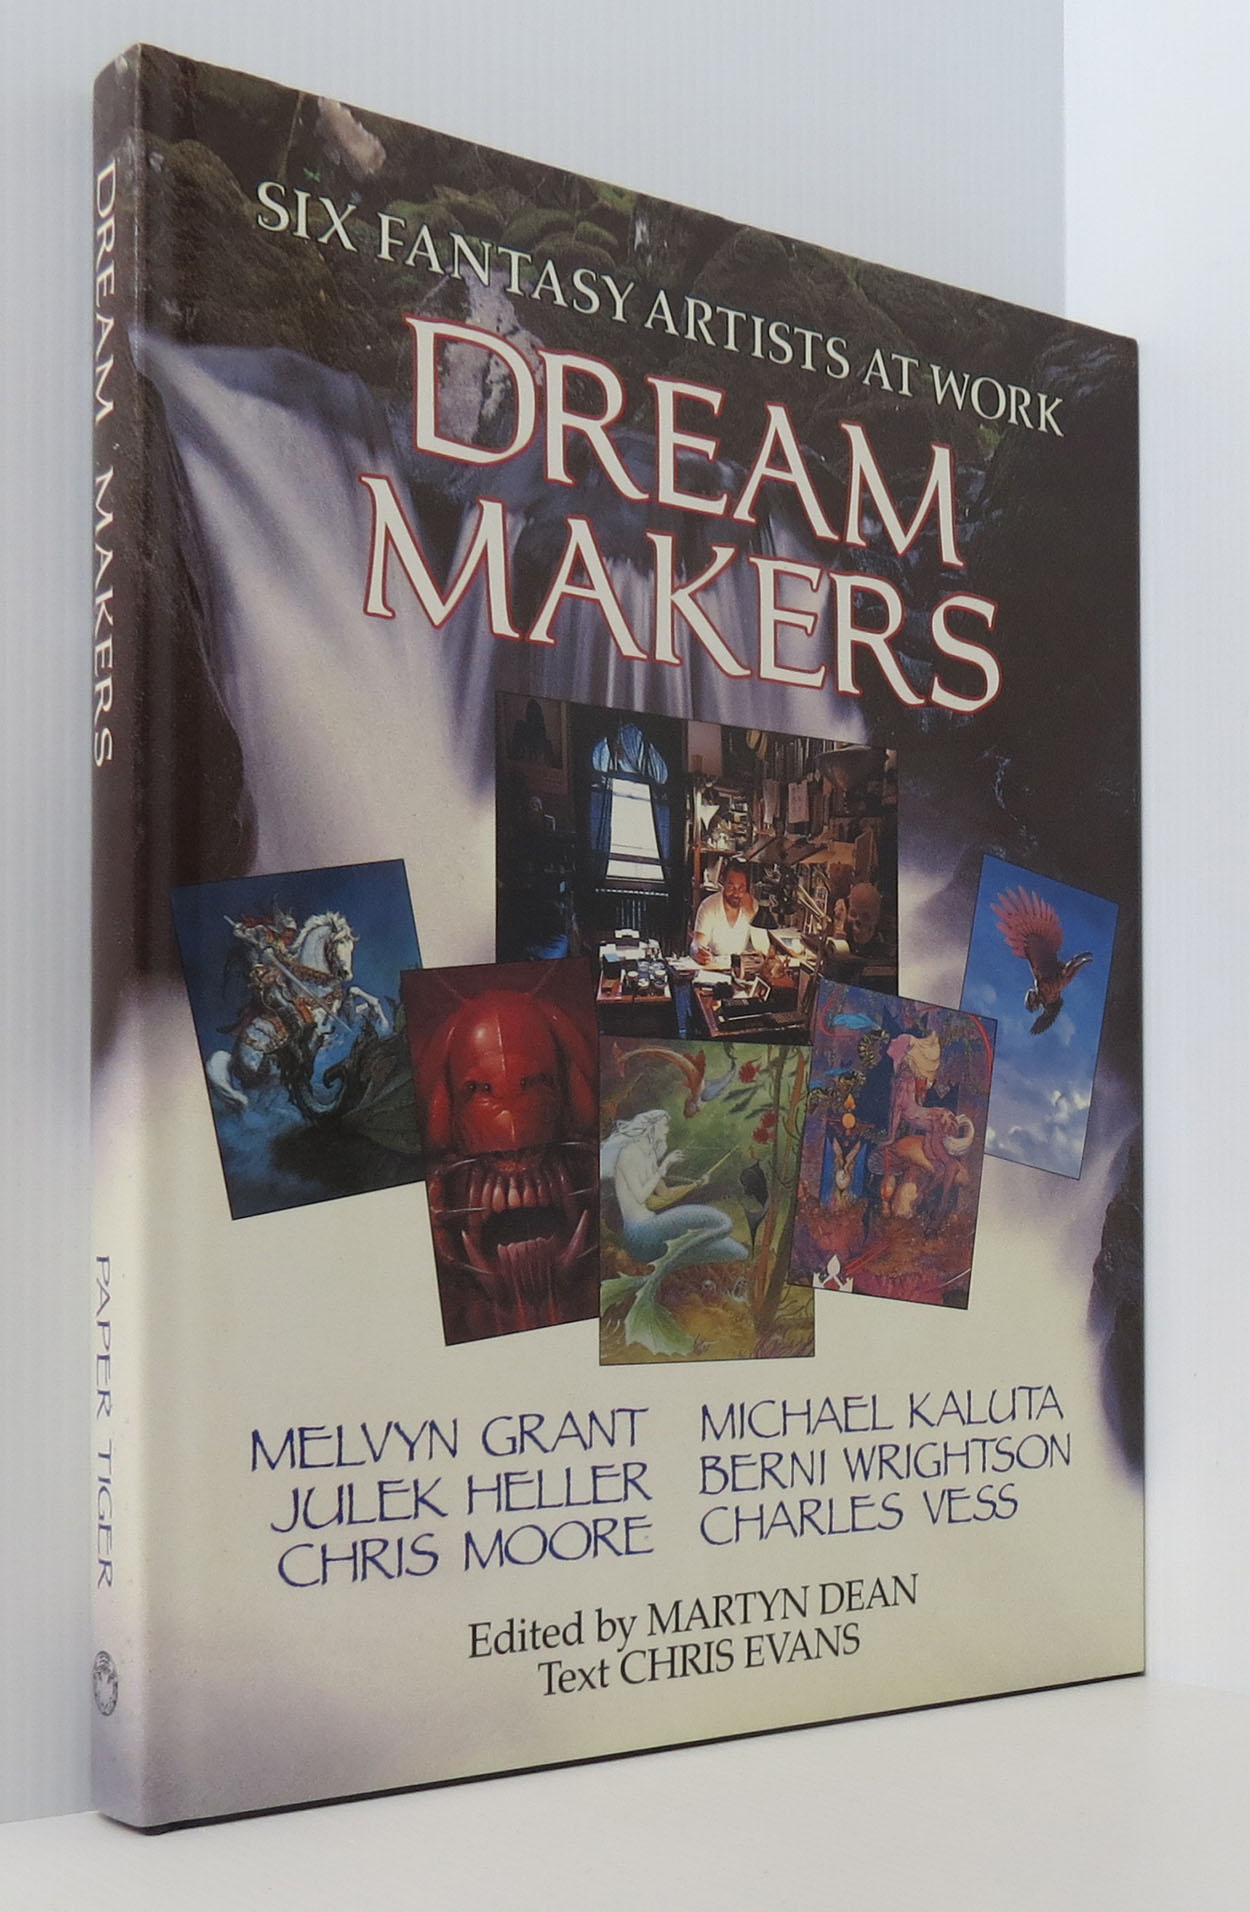 Image for Six Fantasy Artists at Work Dream Makers - Melvyn Grant, Michael Kaluta, Julek Heller, Berni Wrightson, Chris Moore, Charles Vess.